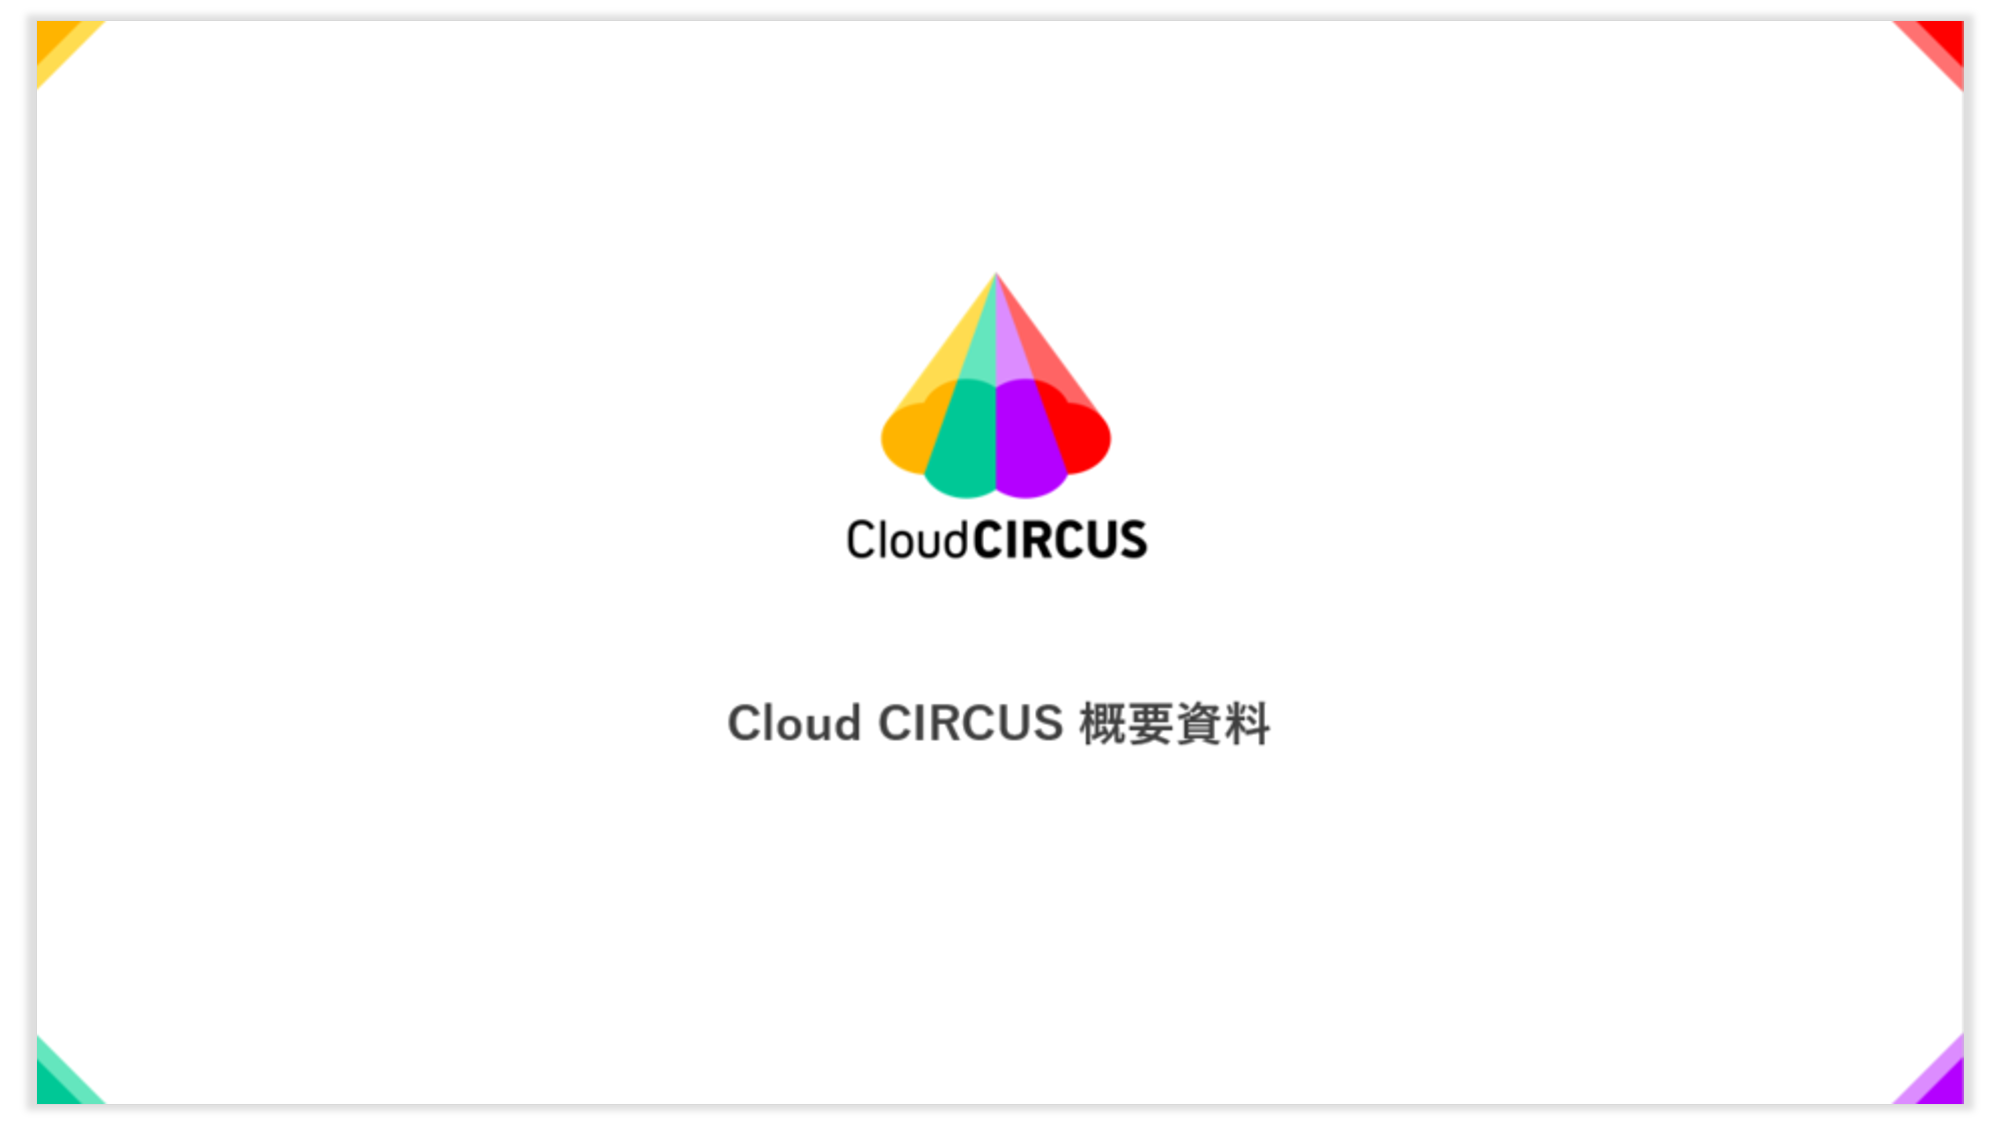 CloudCIRCUS概要資料